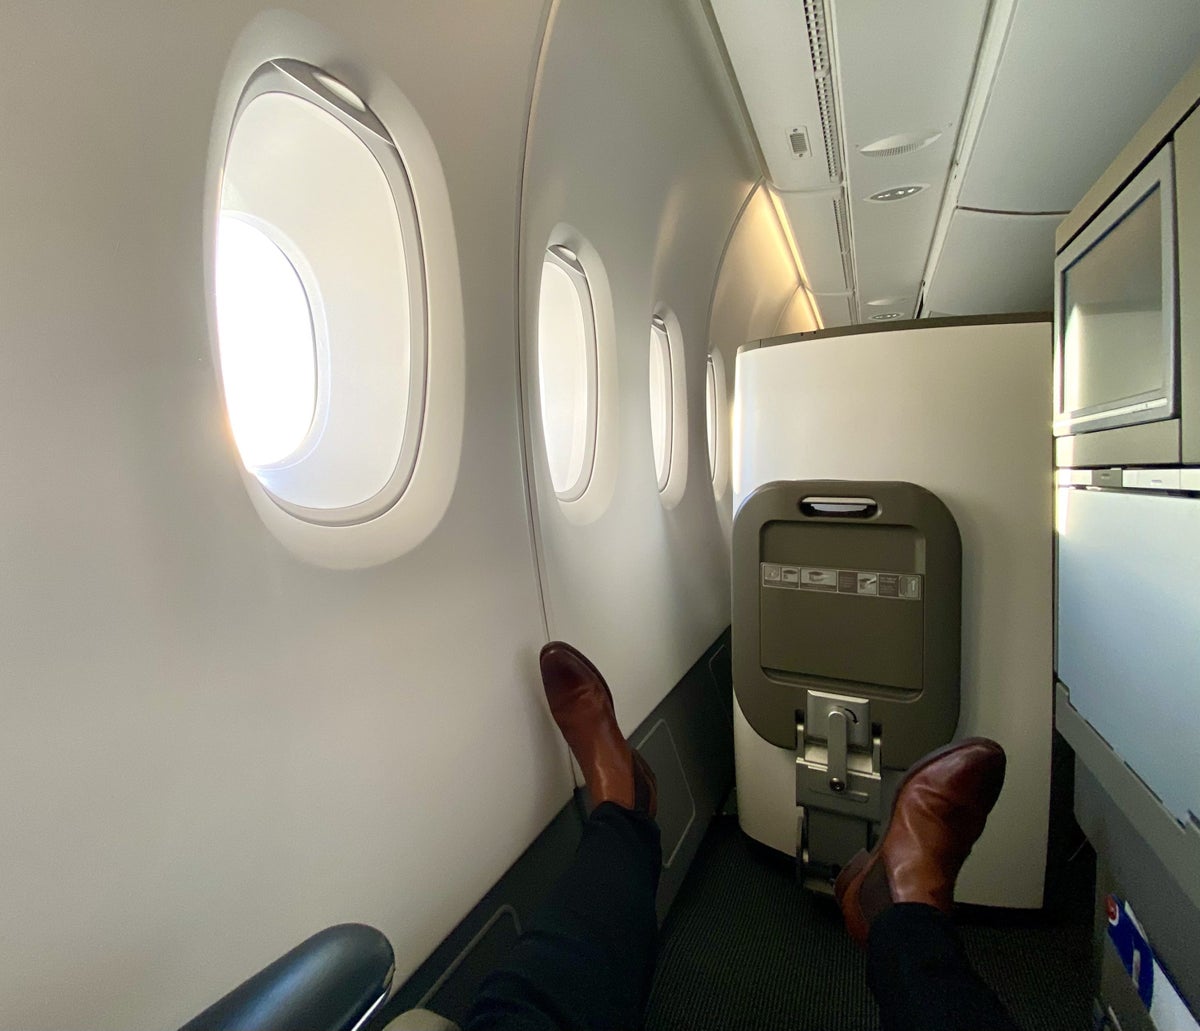 British Airways Club Europe A380 Club World seat 13K legroom and footrest